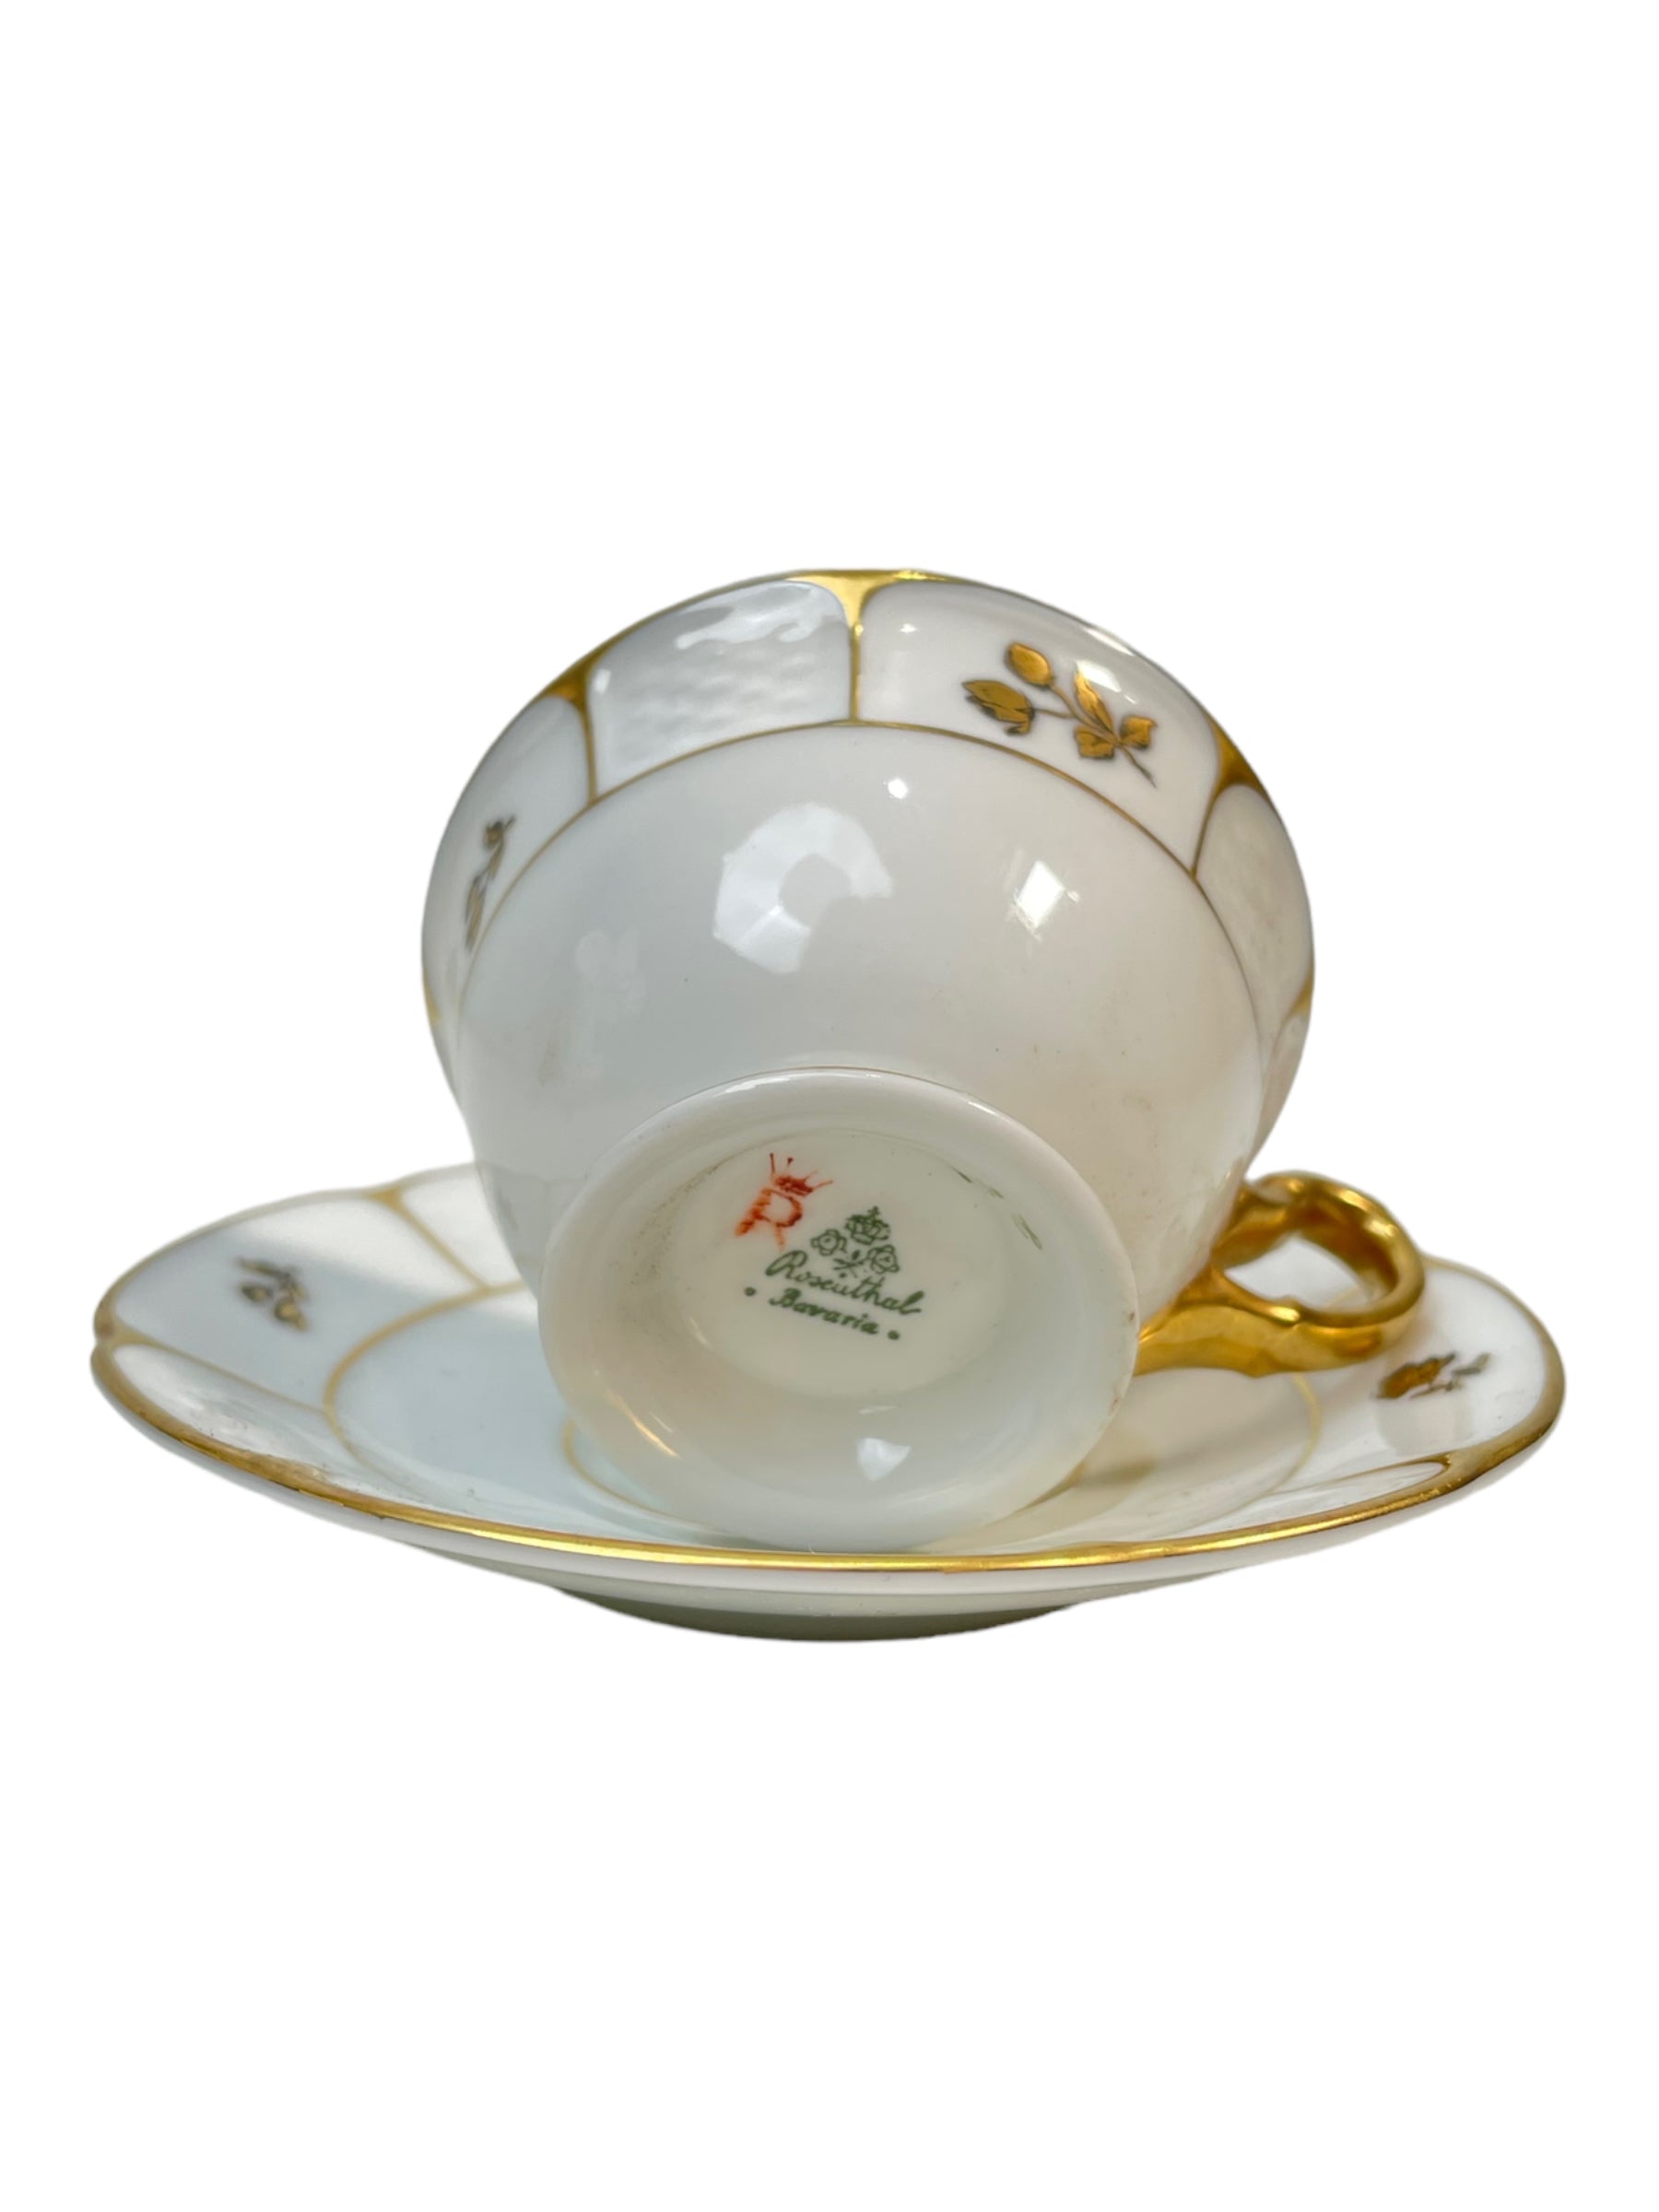 Rosenthal Bavaria China Tea Cups with Saucers and Metal Rack